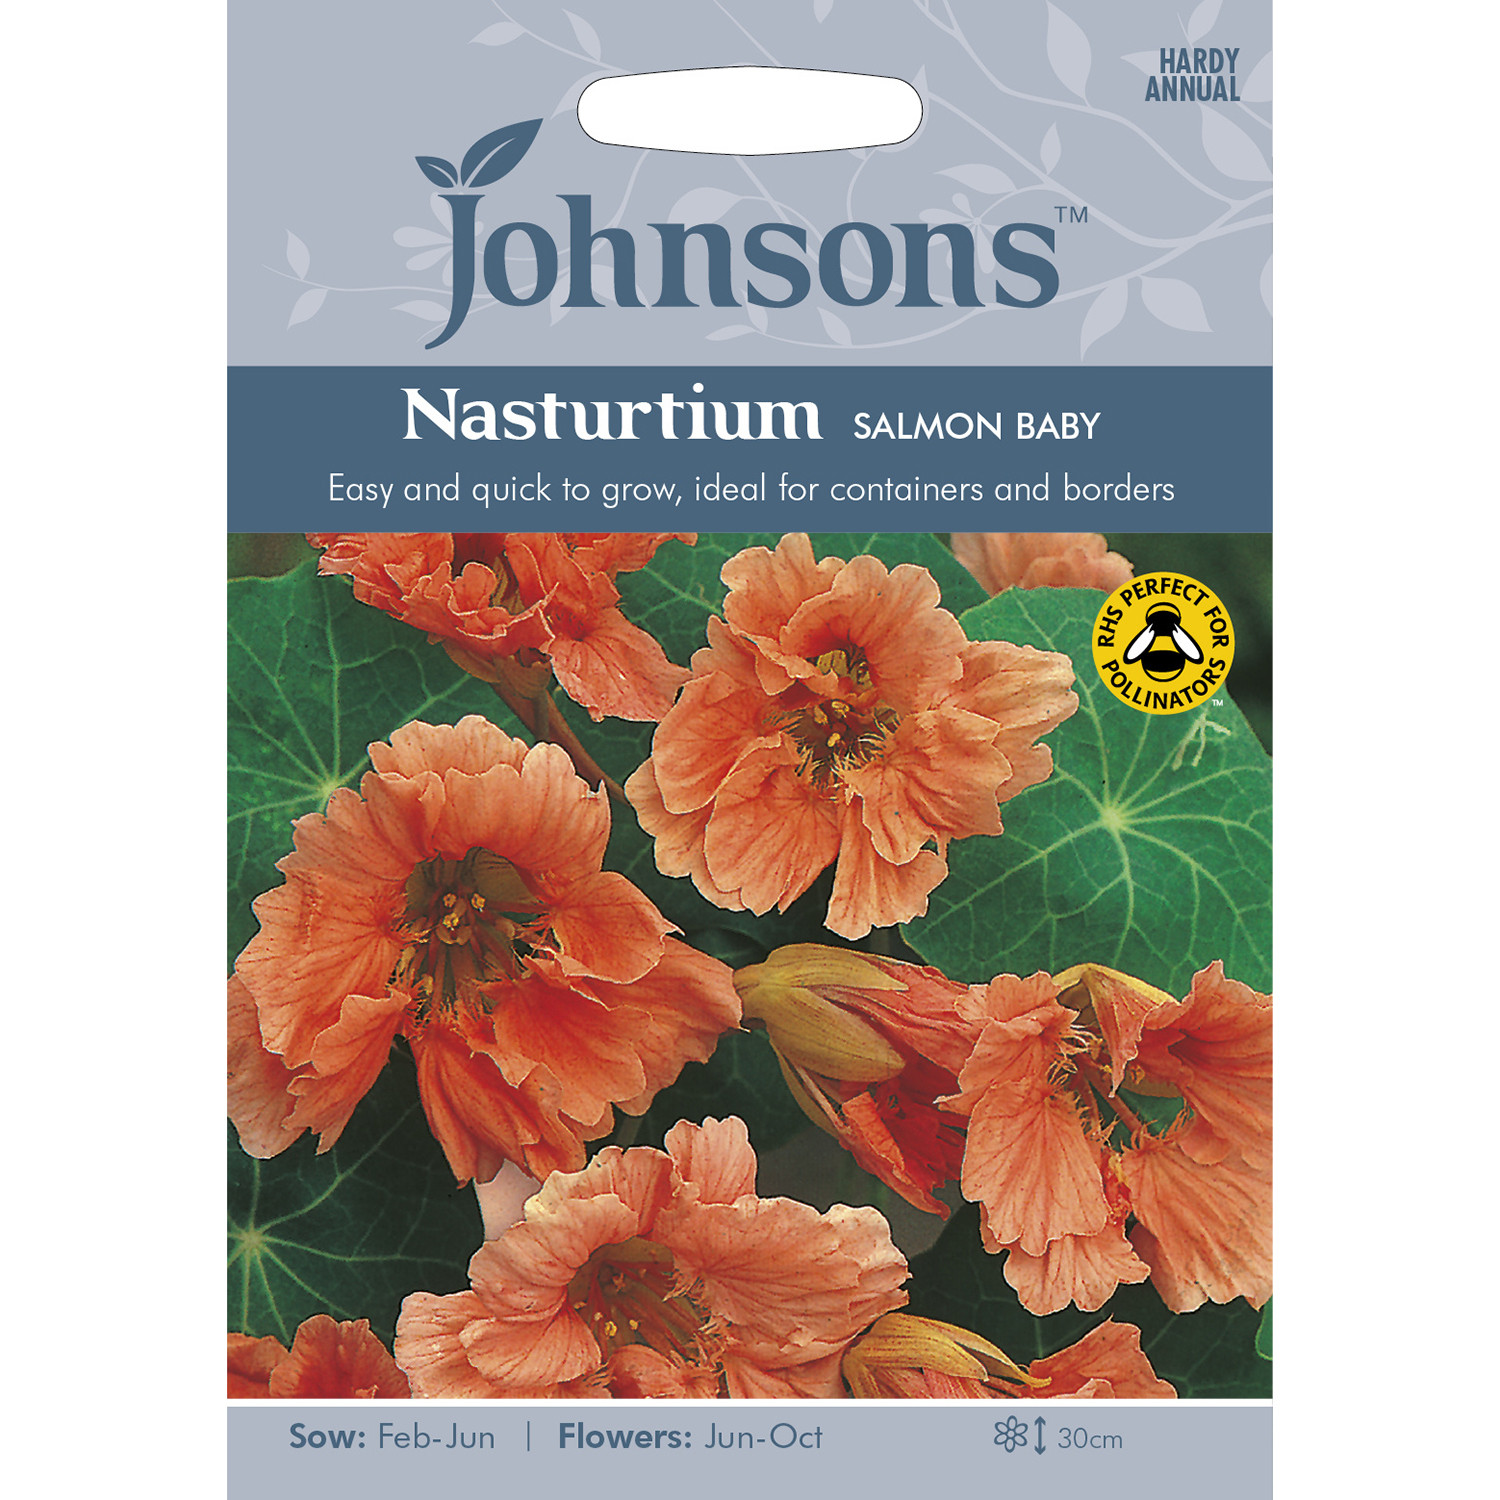 Johnsons Nasturtium Salmon Baby Flower Seeds Image 2